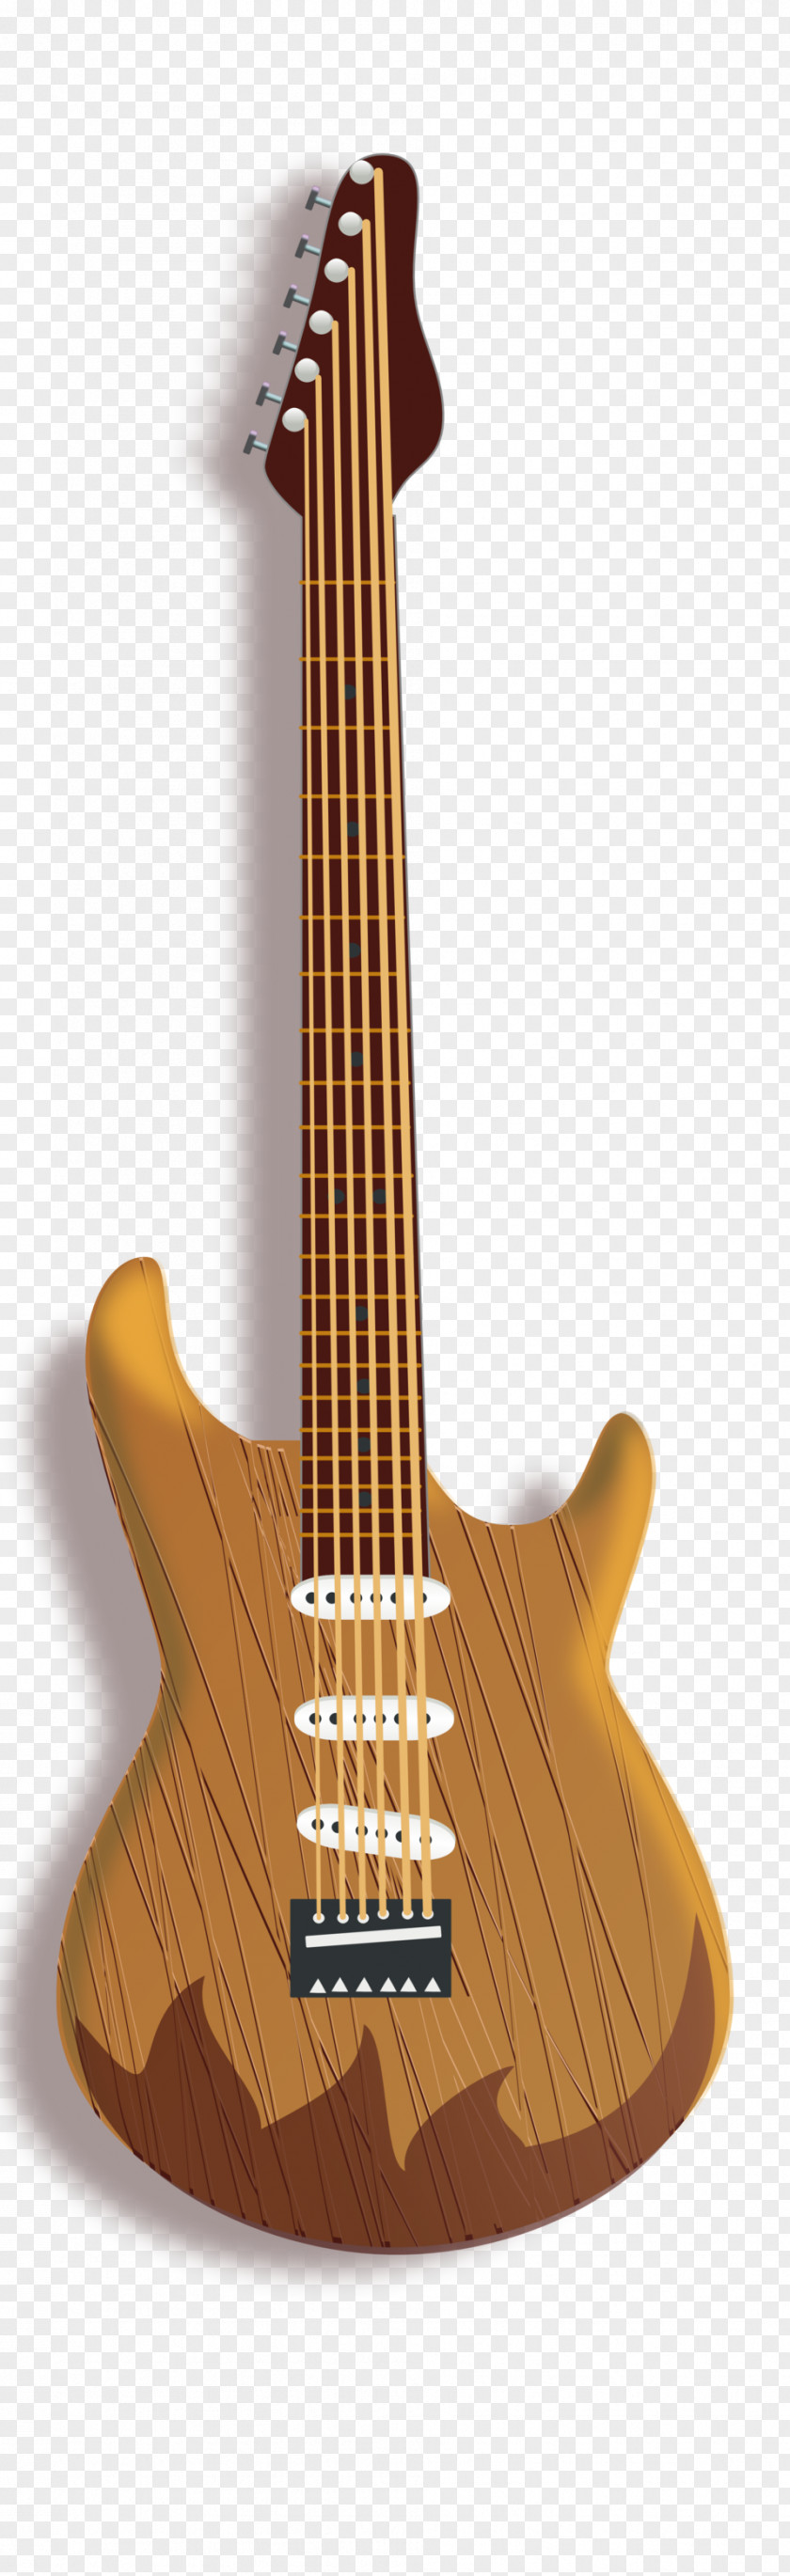 Guitarist Musical Instruments Electric Guitar PNG